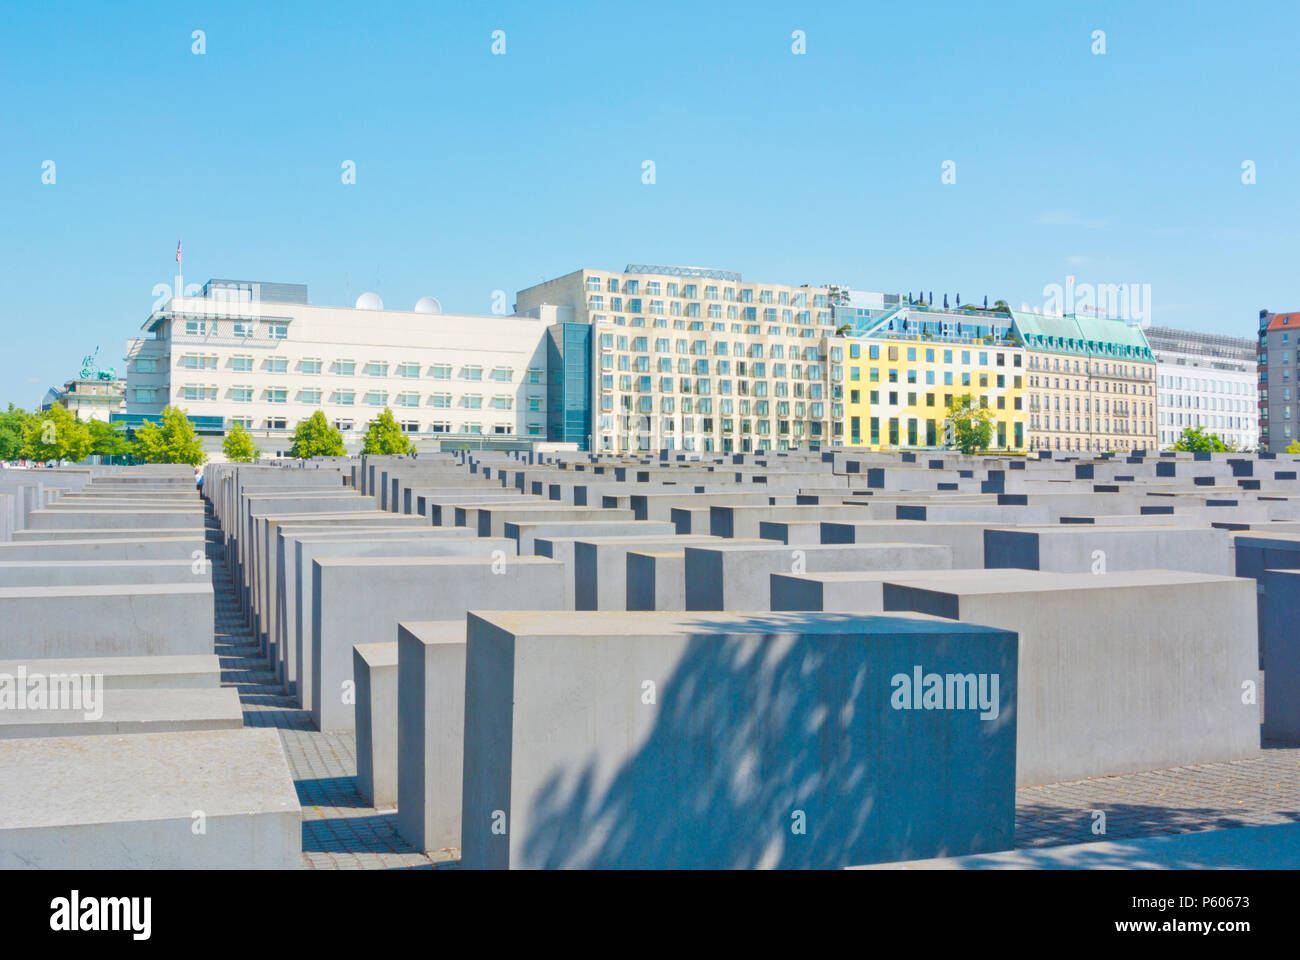 Memorial to the Murdered Jews of Europe, Holocaust memorial, Mitte, Berlin, Germany Stock Photo